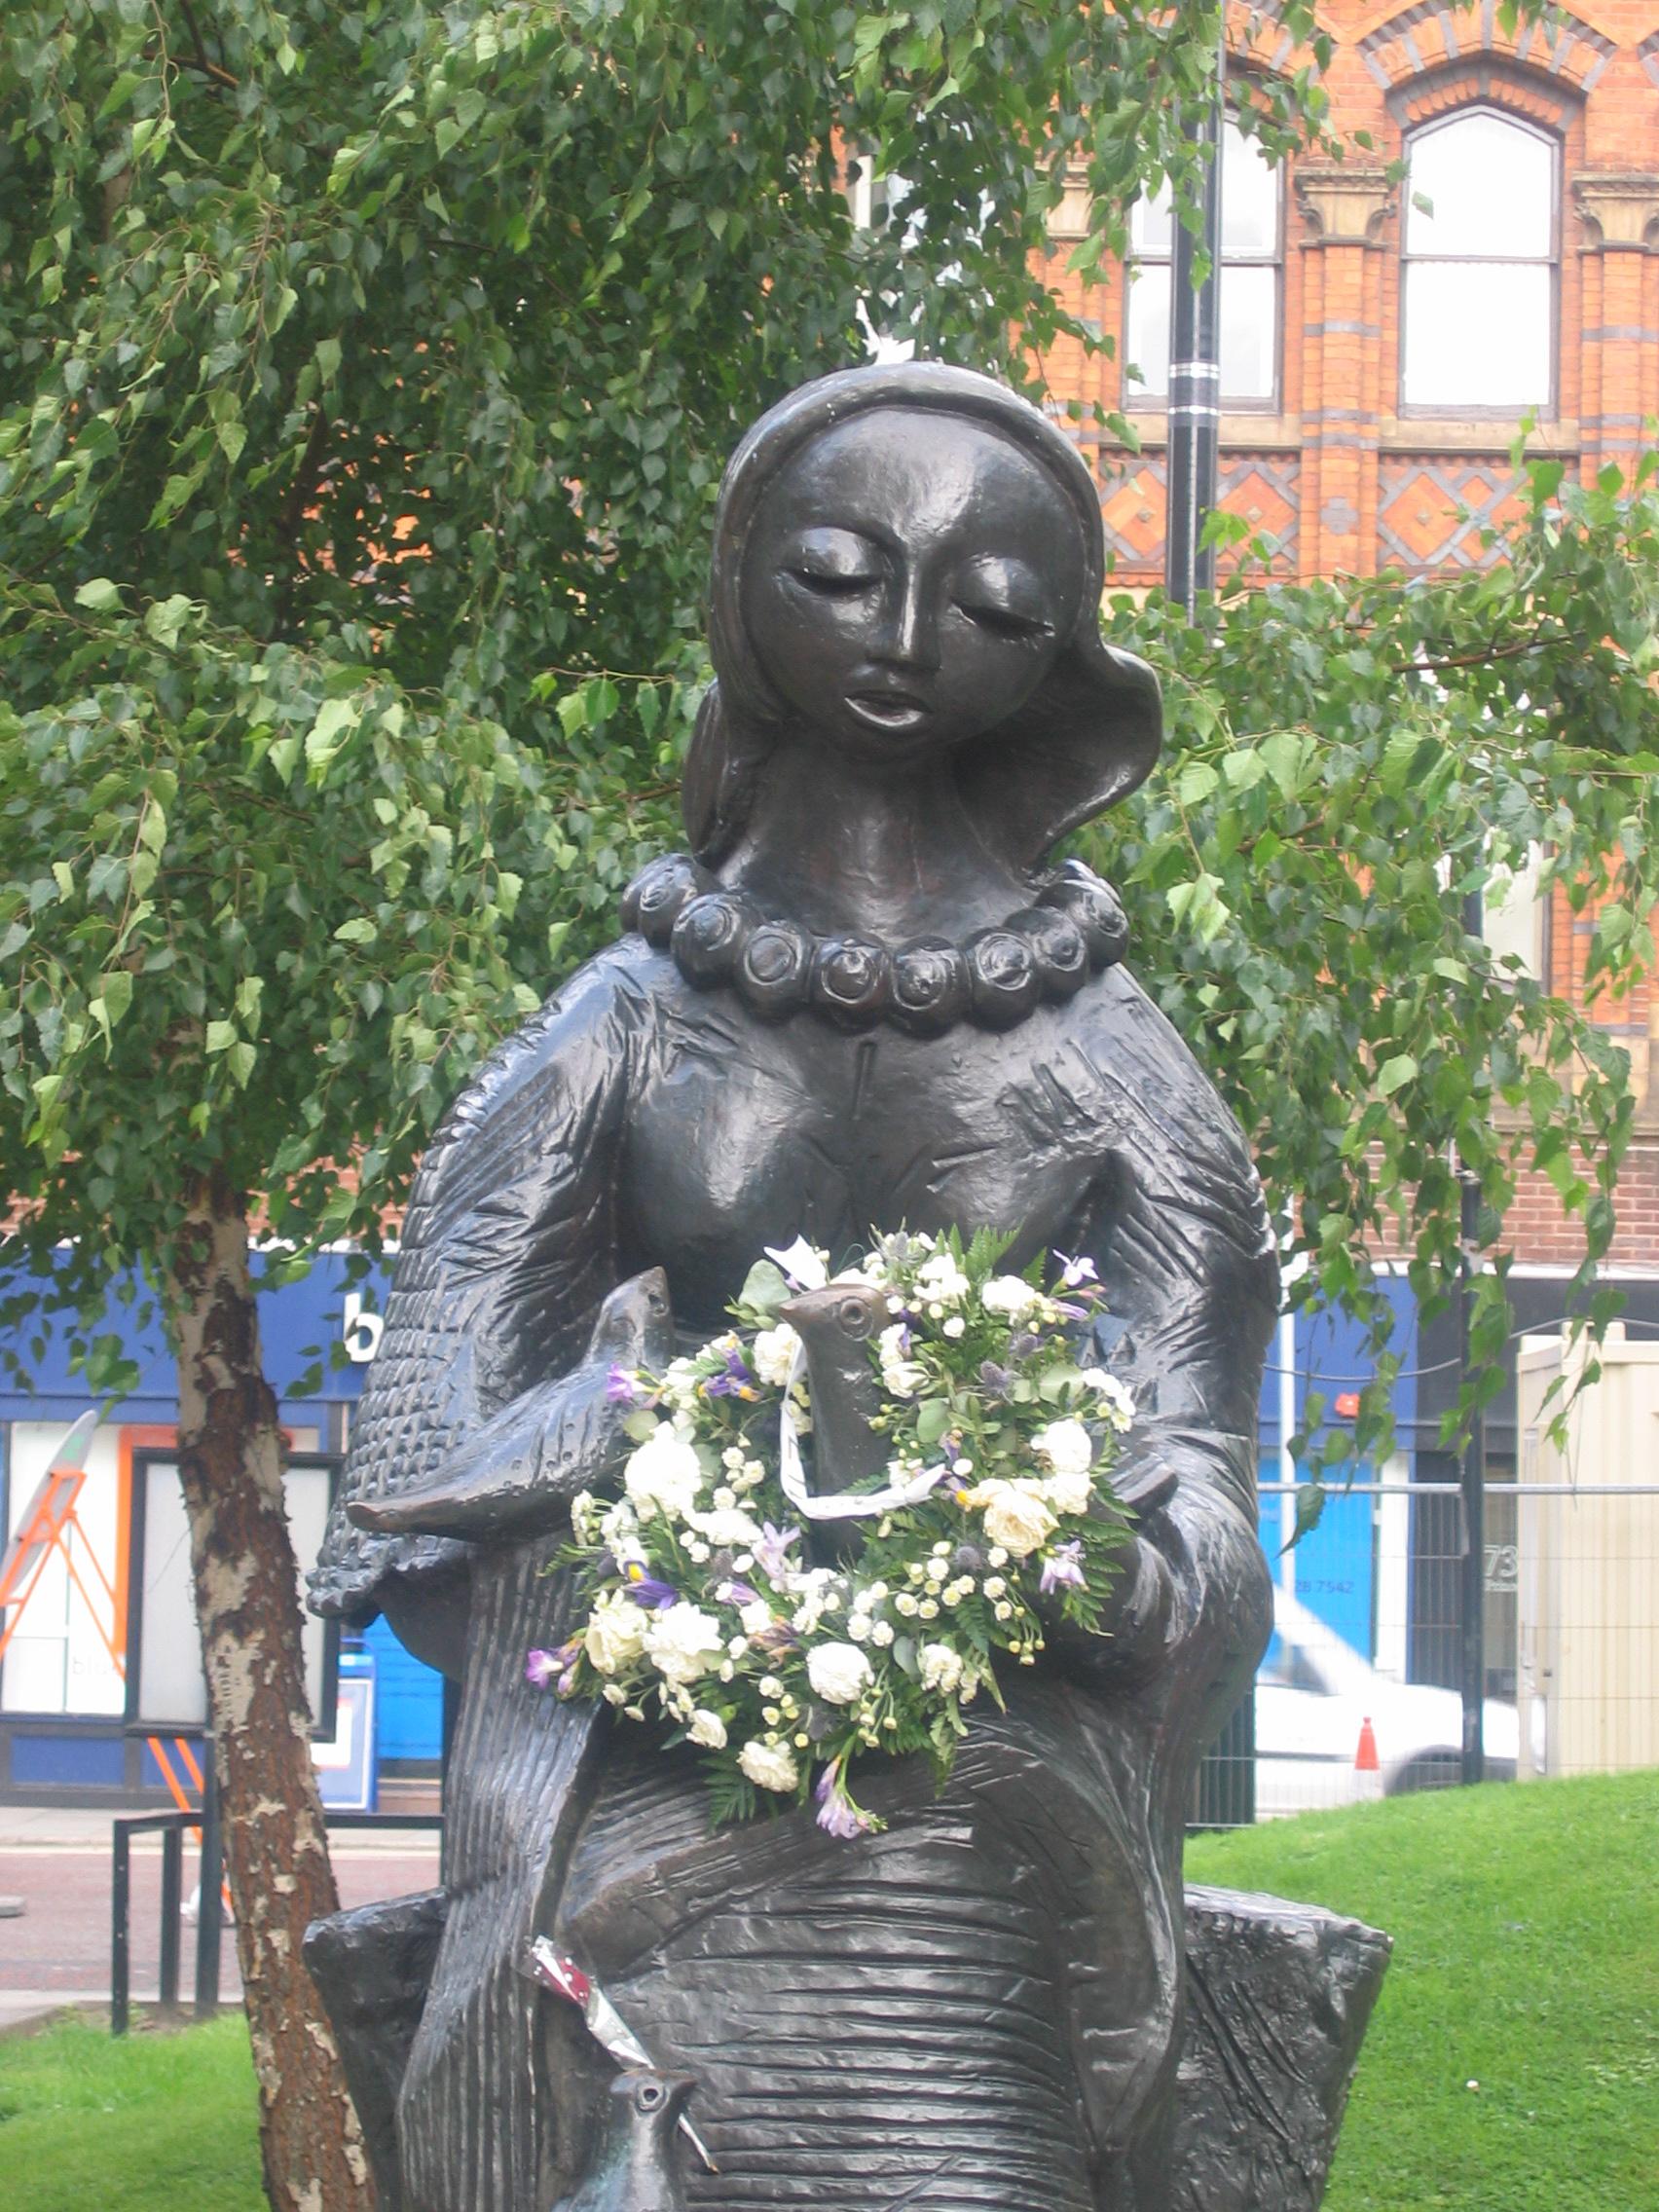 Photo taken by me - Manchester Peace Garden statue 